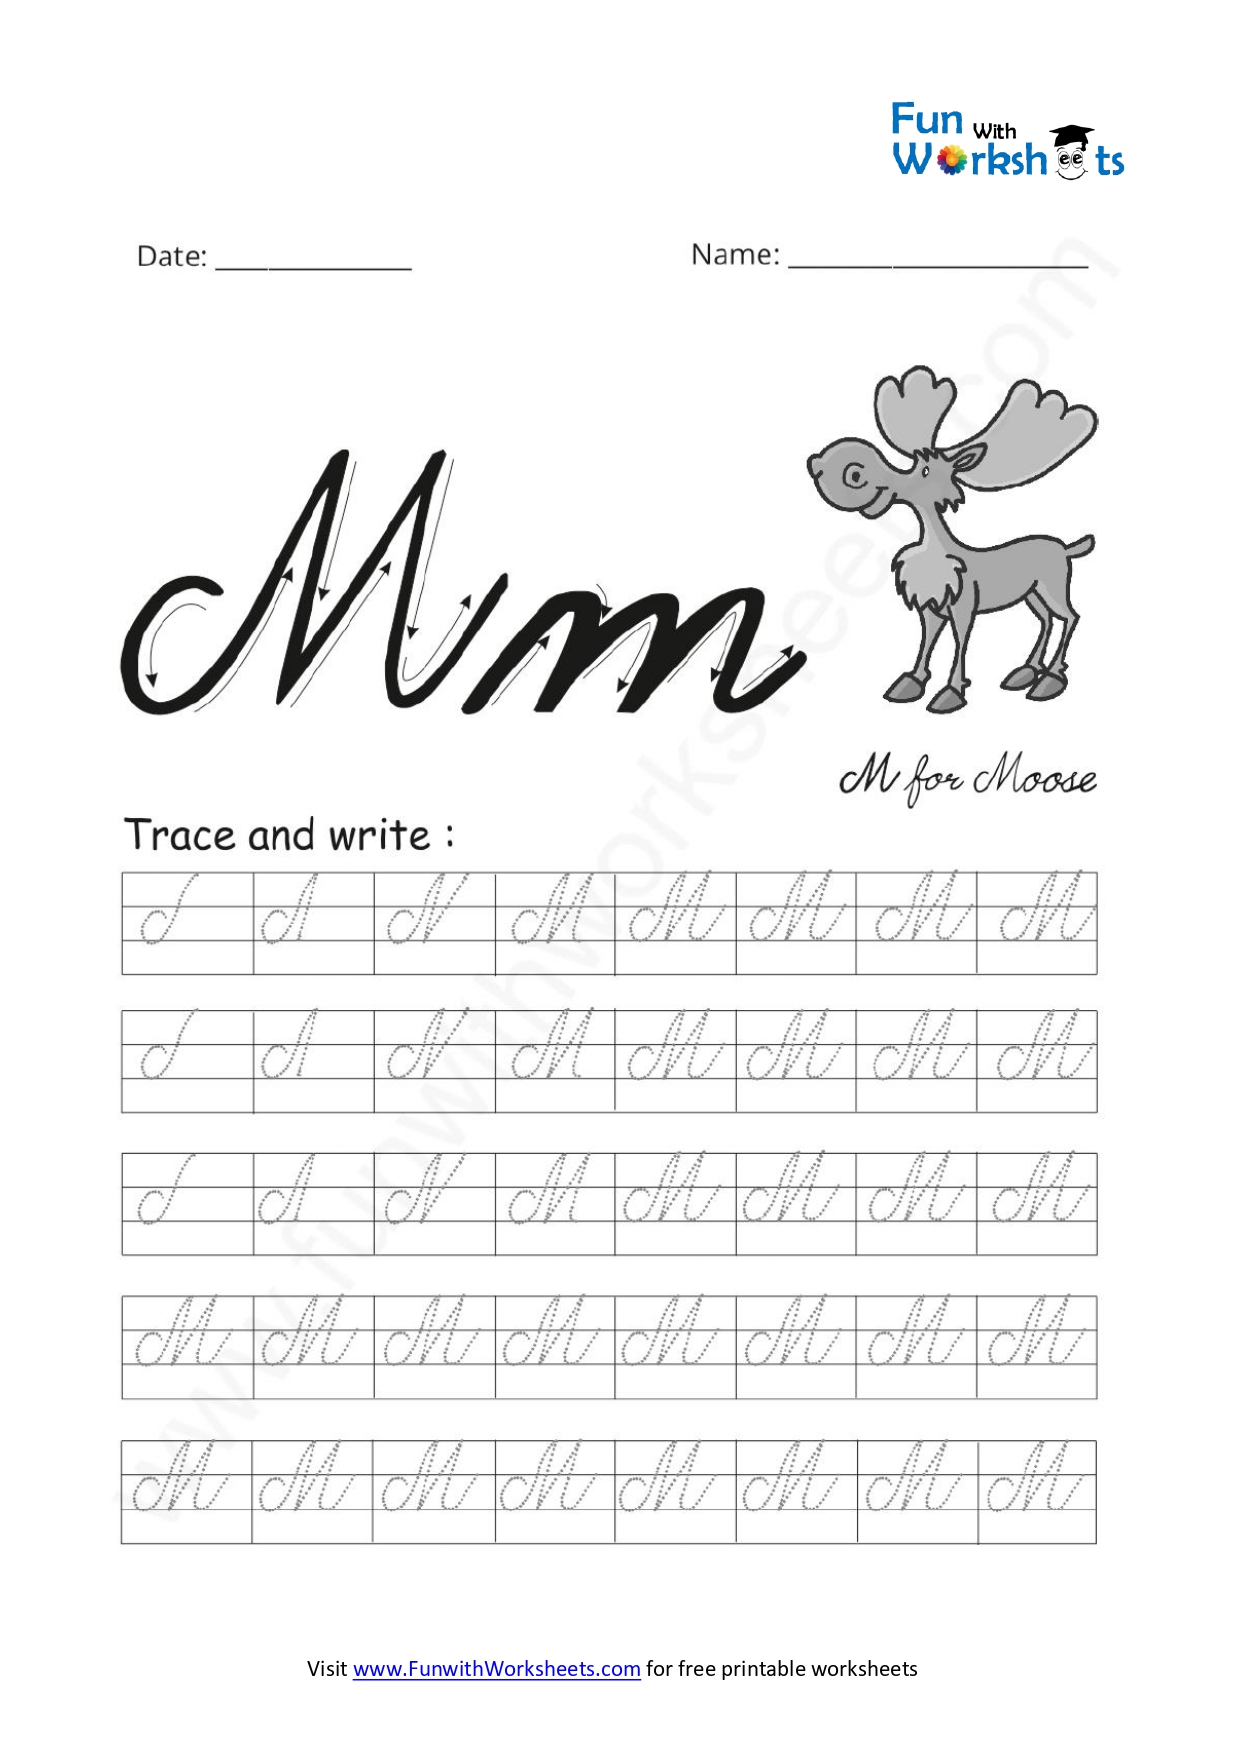 Cursive Handwriting Practice Capital Letter M - free printable worksheets